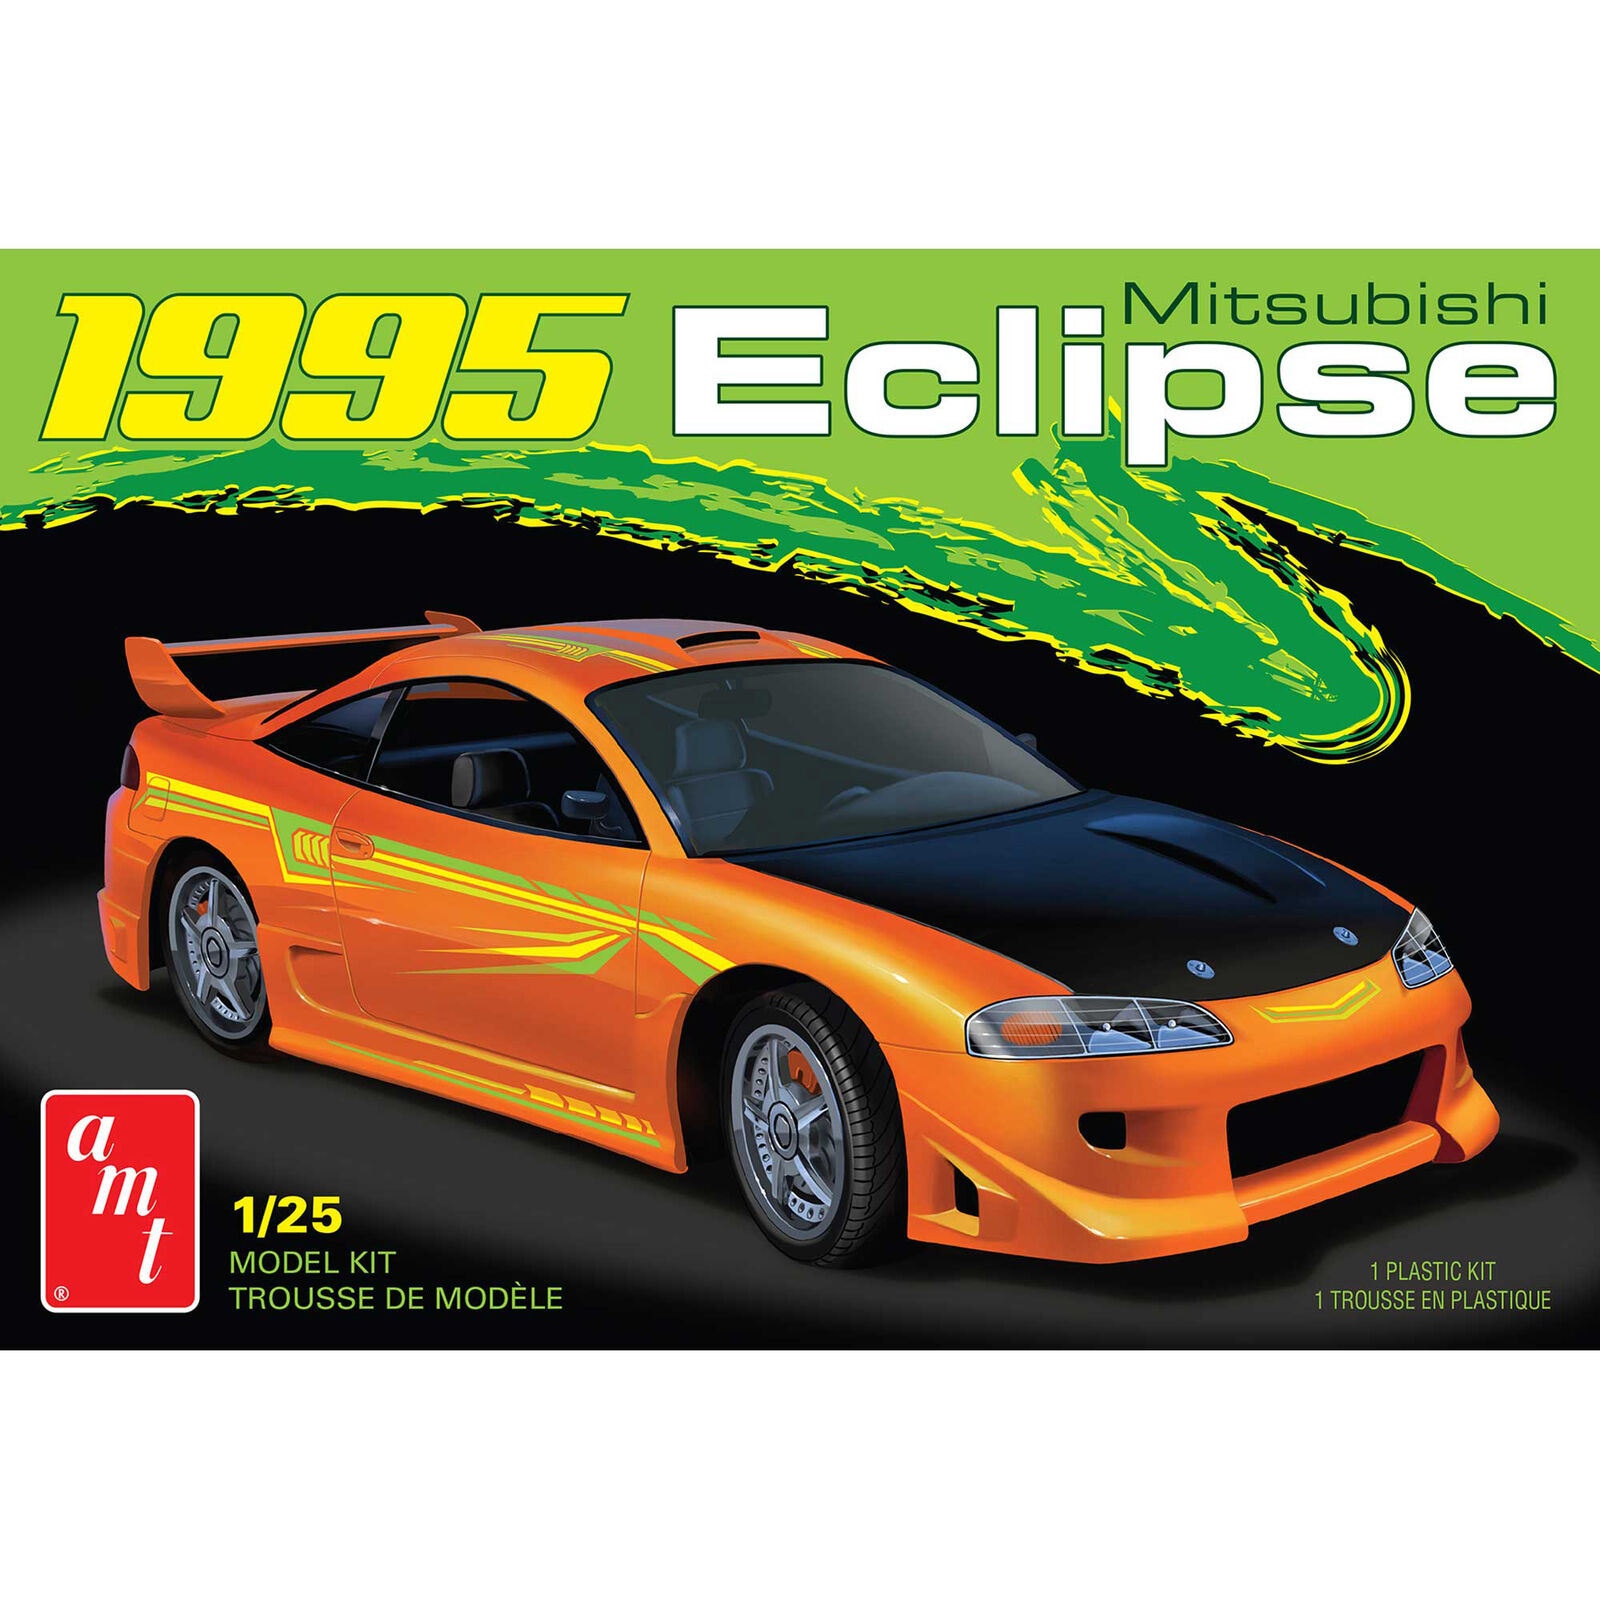 1/25 1995 Mitsubishi Eclipse, Model Kit